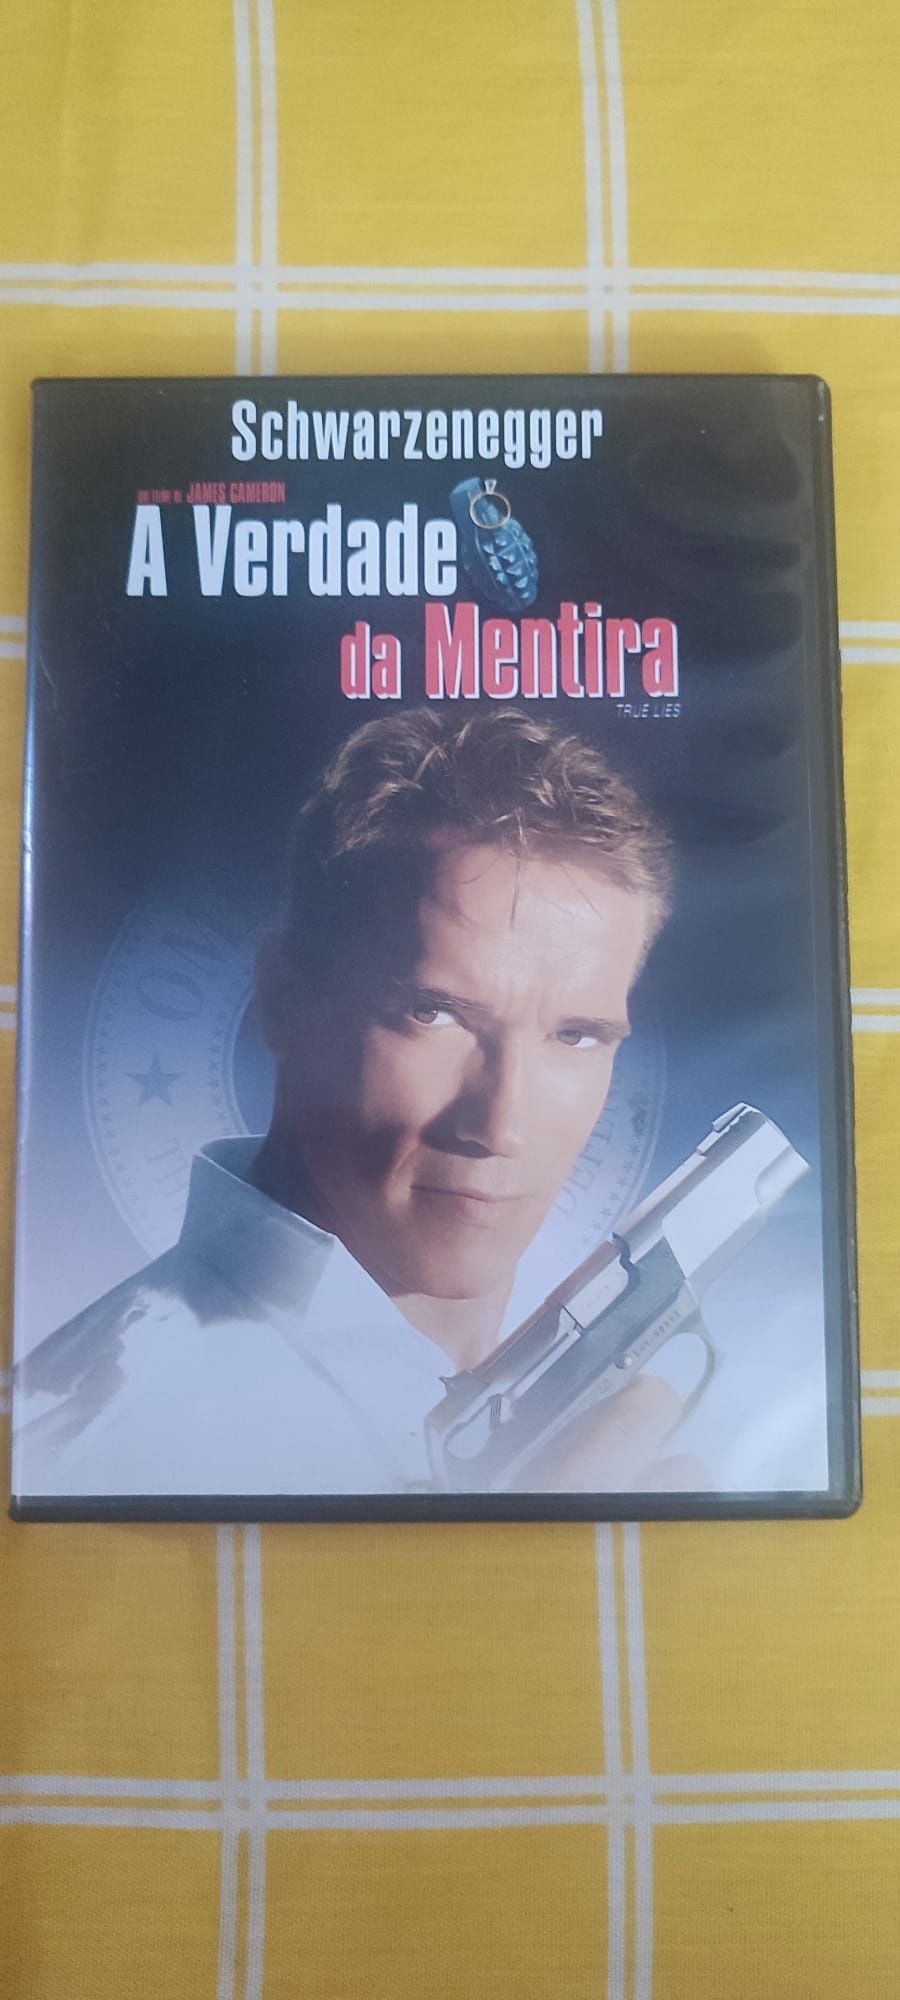 Arnold Schwarzenegger dvd